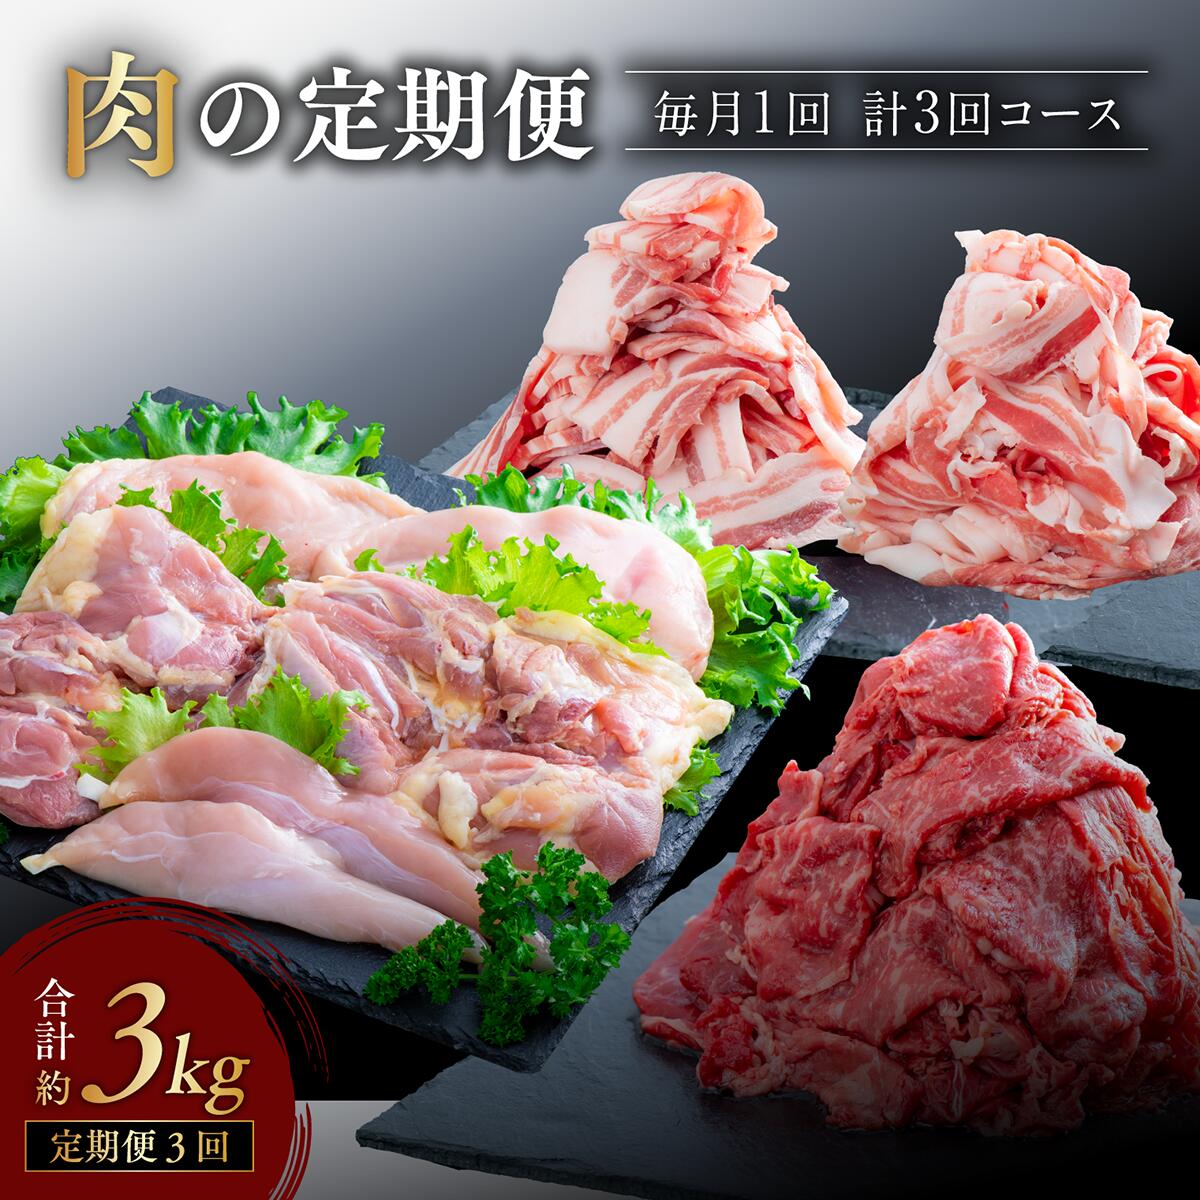 GA-02 【牛・豚・鶏】肉の定期便 年3回